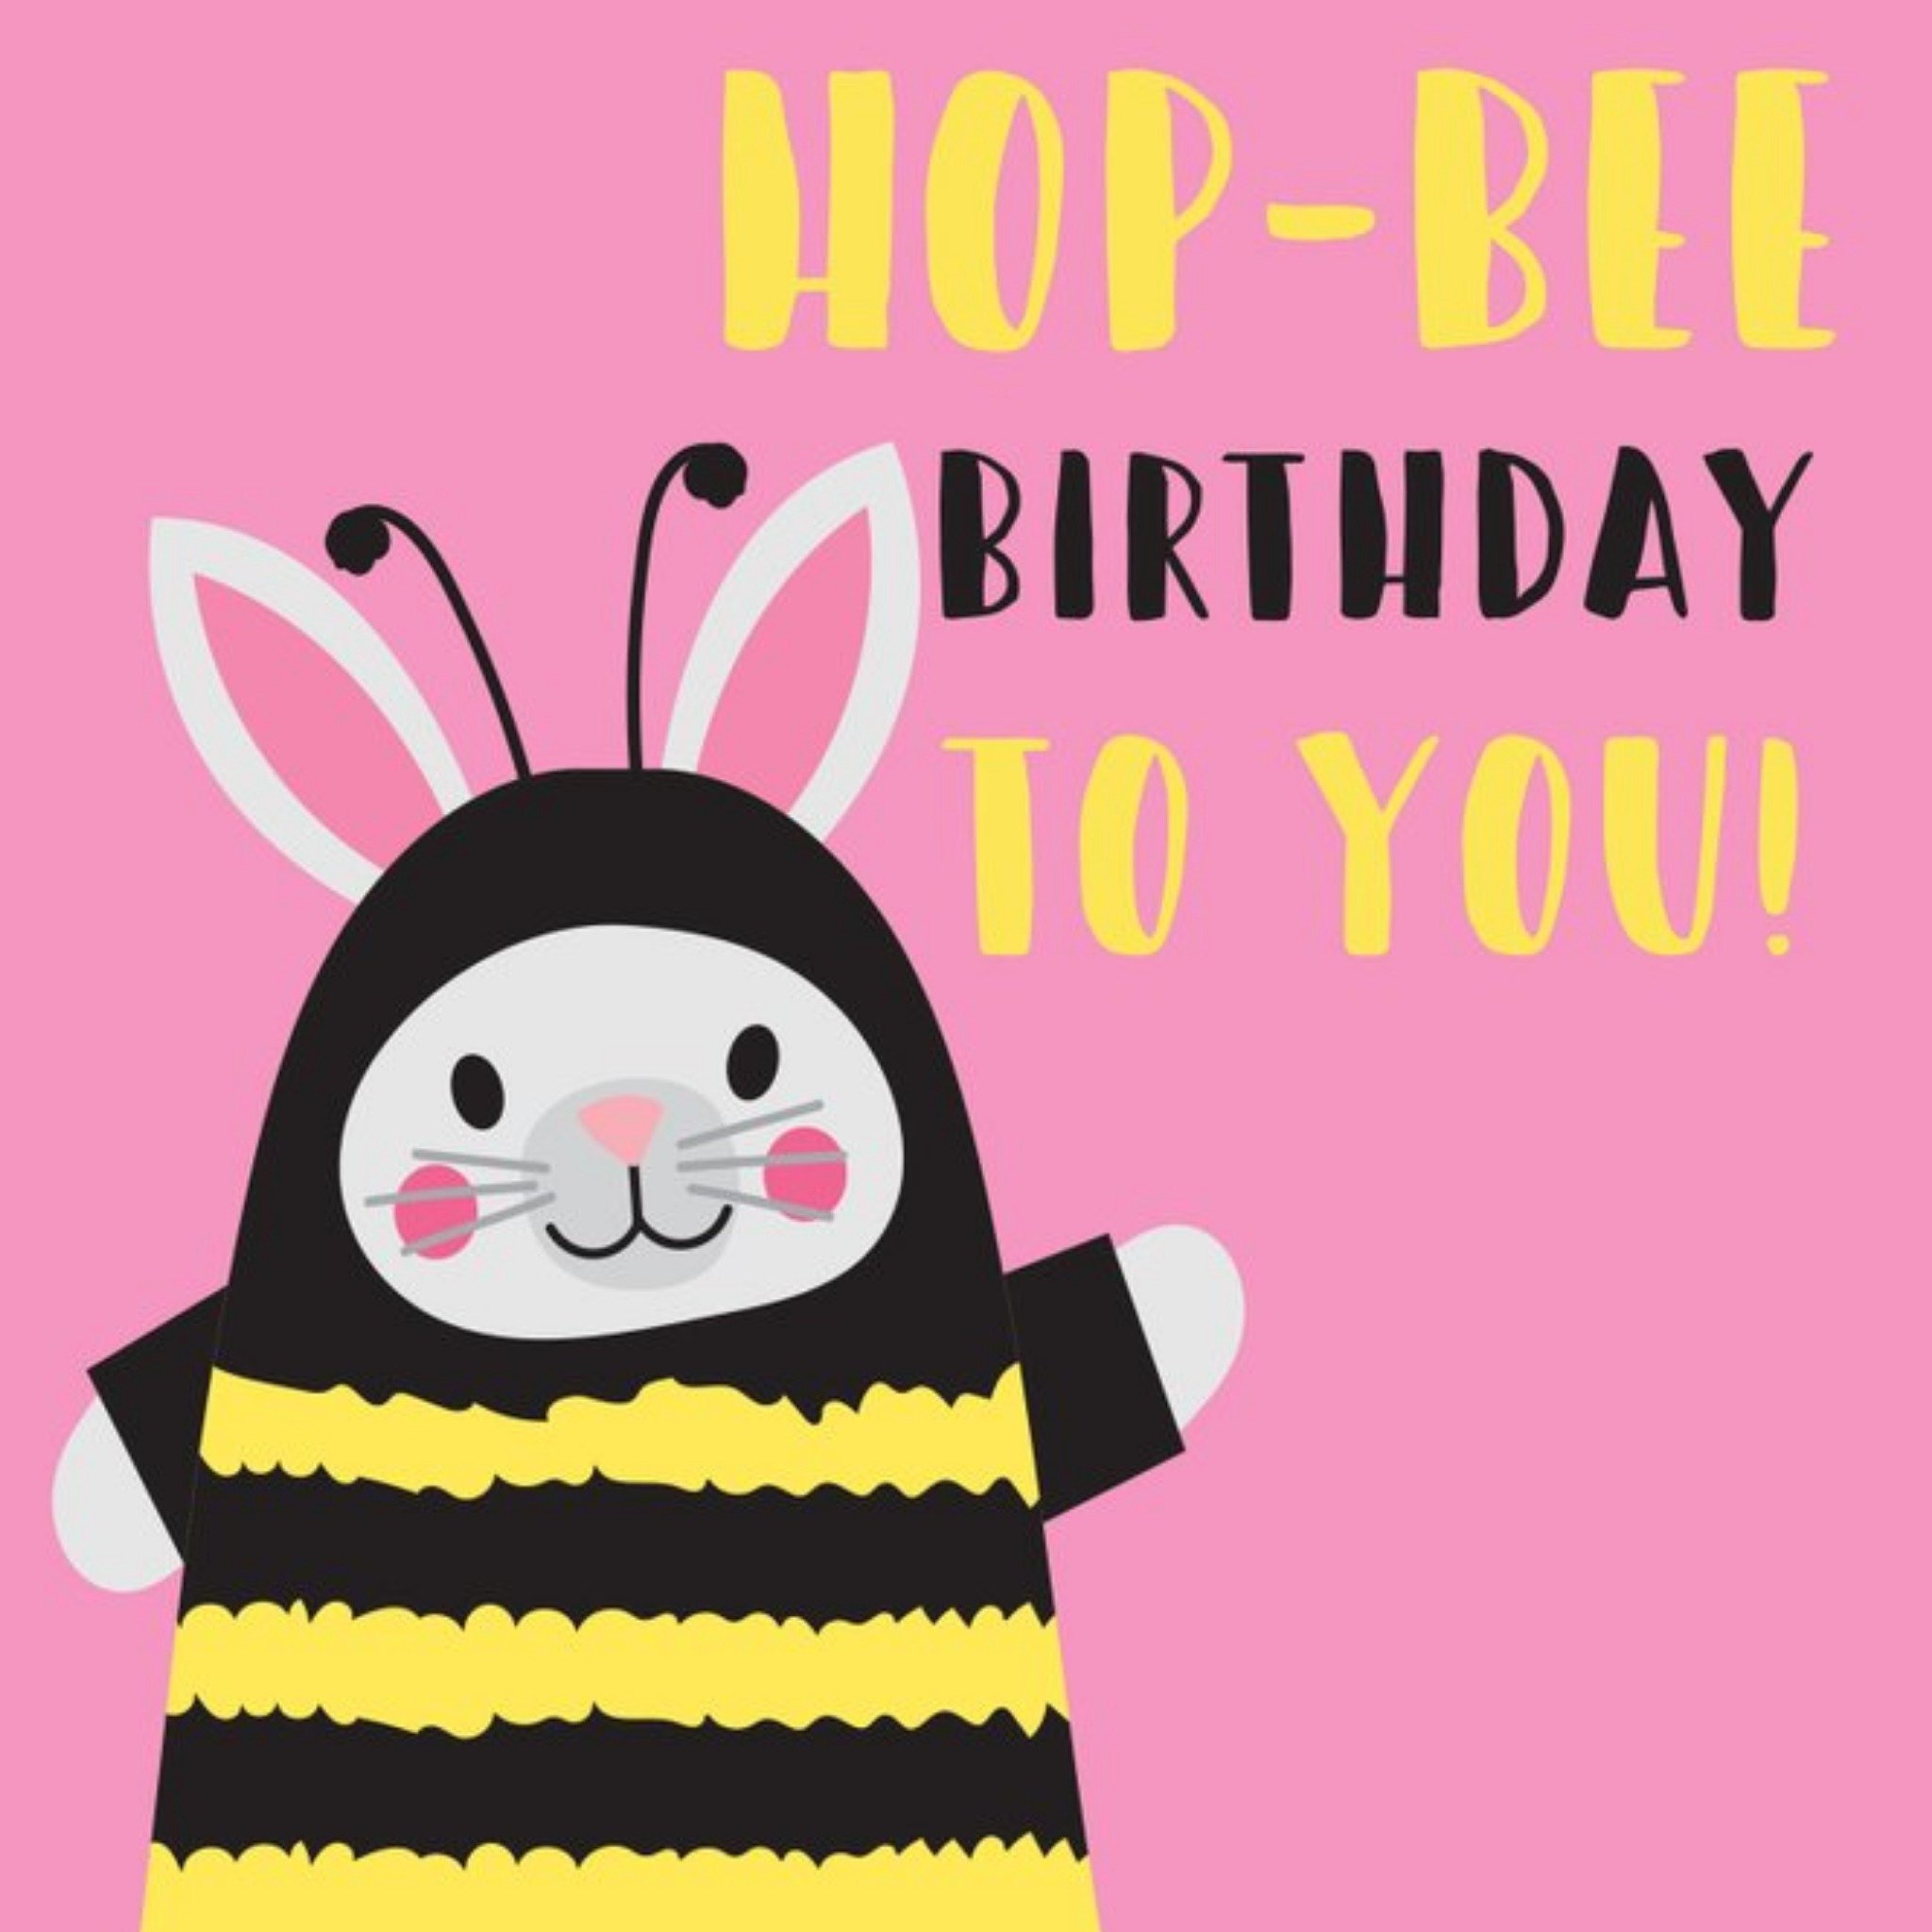 Moonpig Cute Rabbit Dressed As Bee Hop-Bee Birthday Card, Large